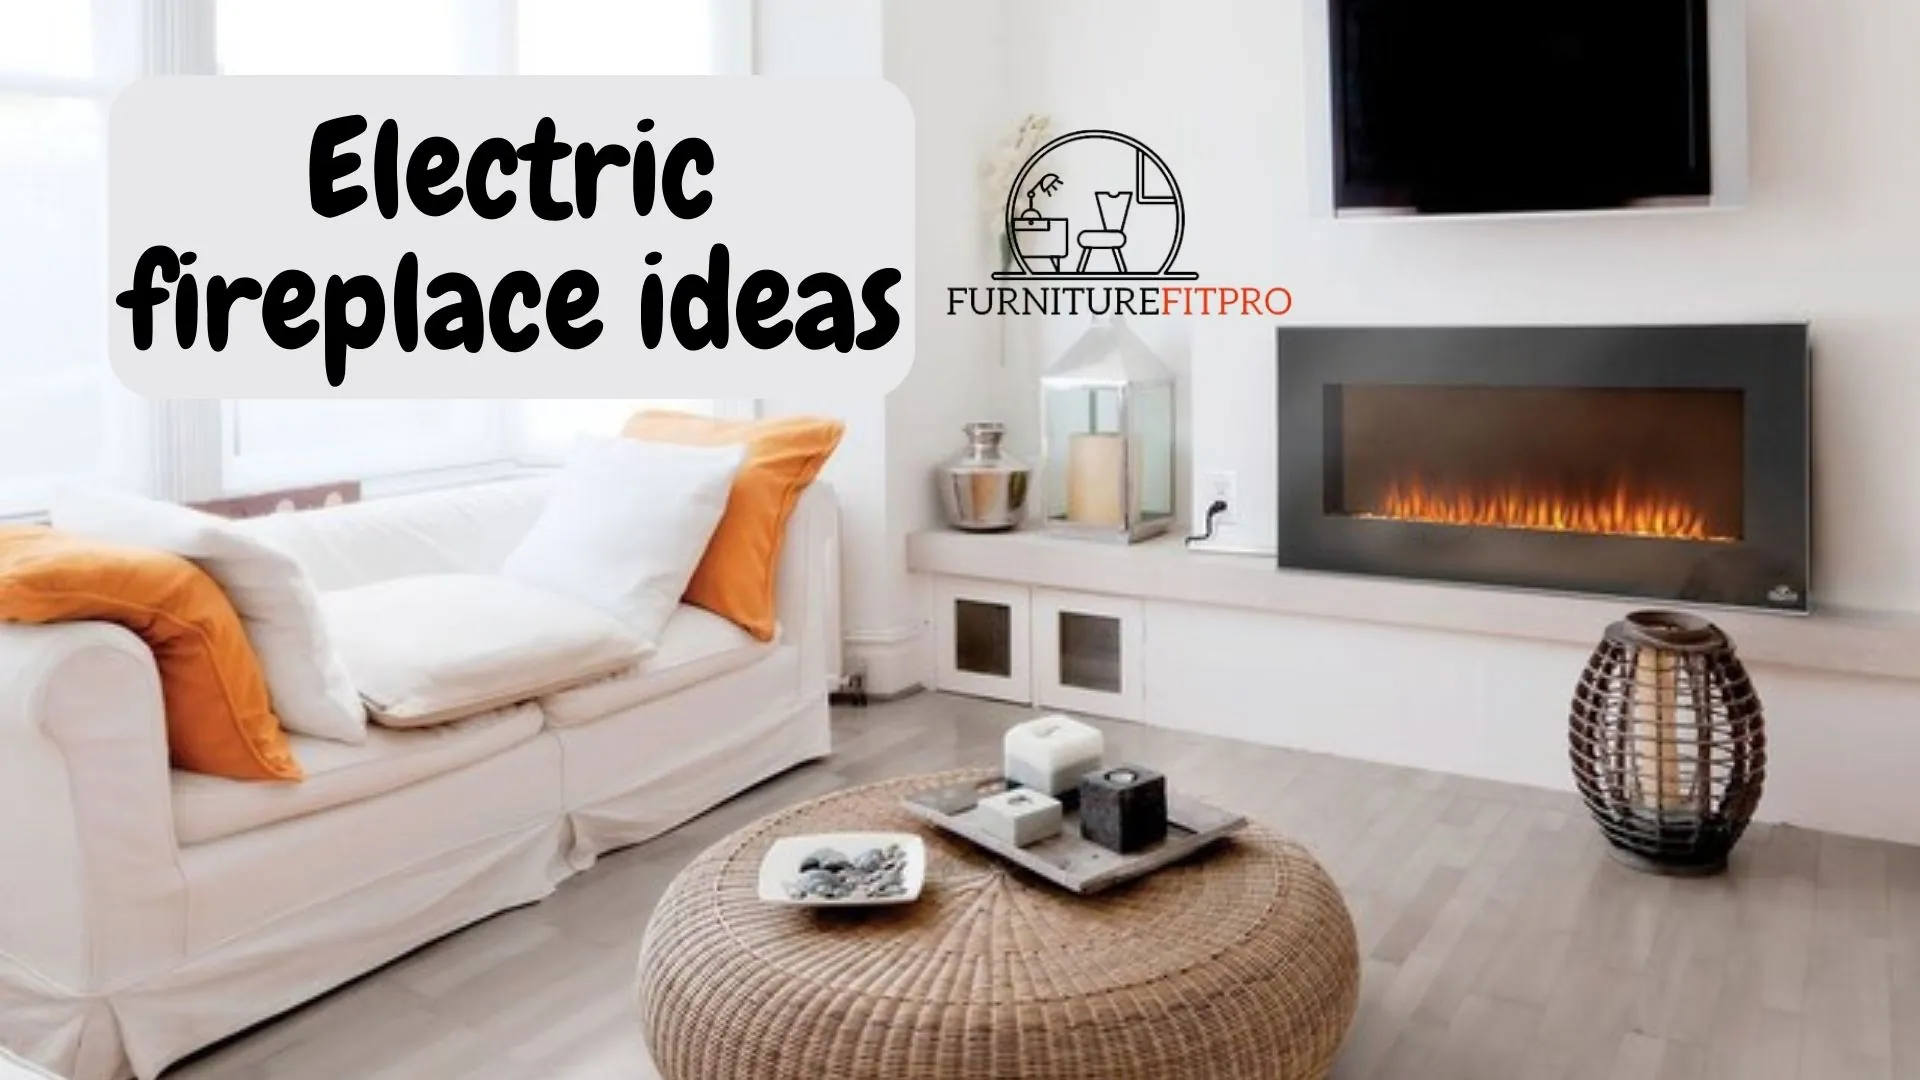 Electric fireplace ideas